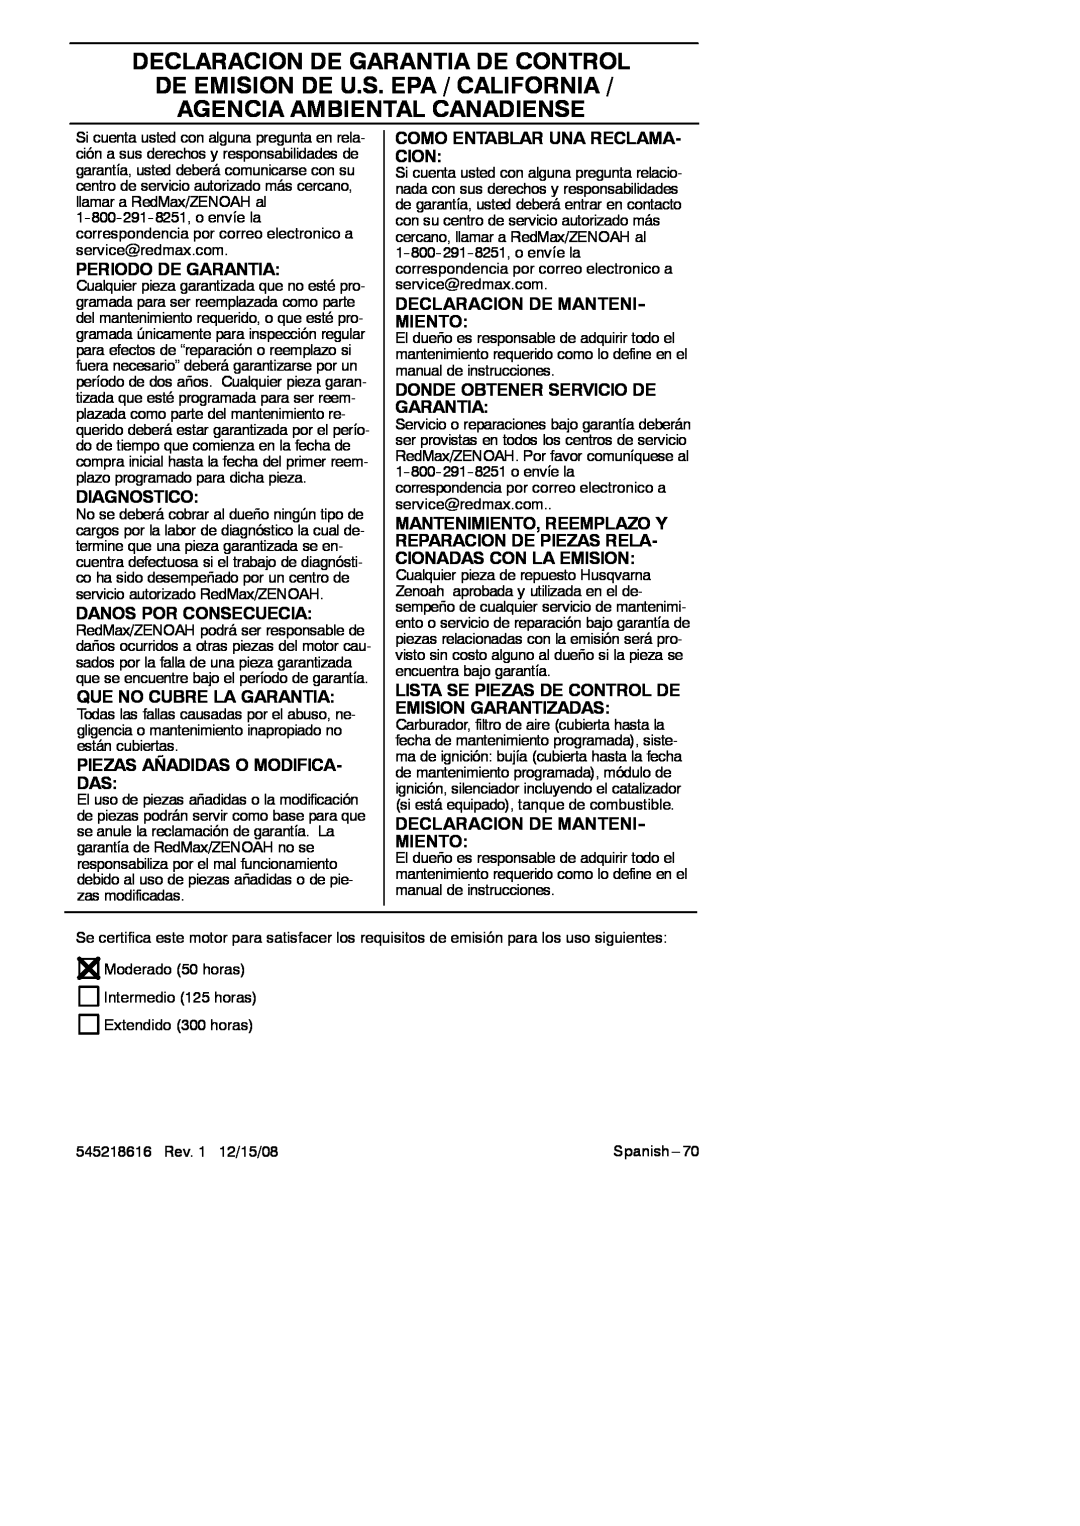 RedMax HB280 manual Periodo De Garantia, Diagnostico, Danos Por Consecuecia, Que No Cubre La Garantia 